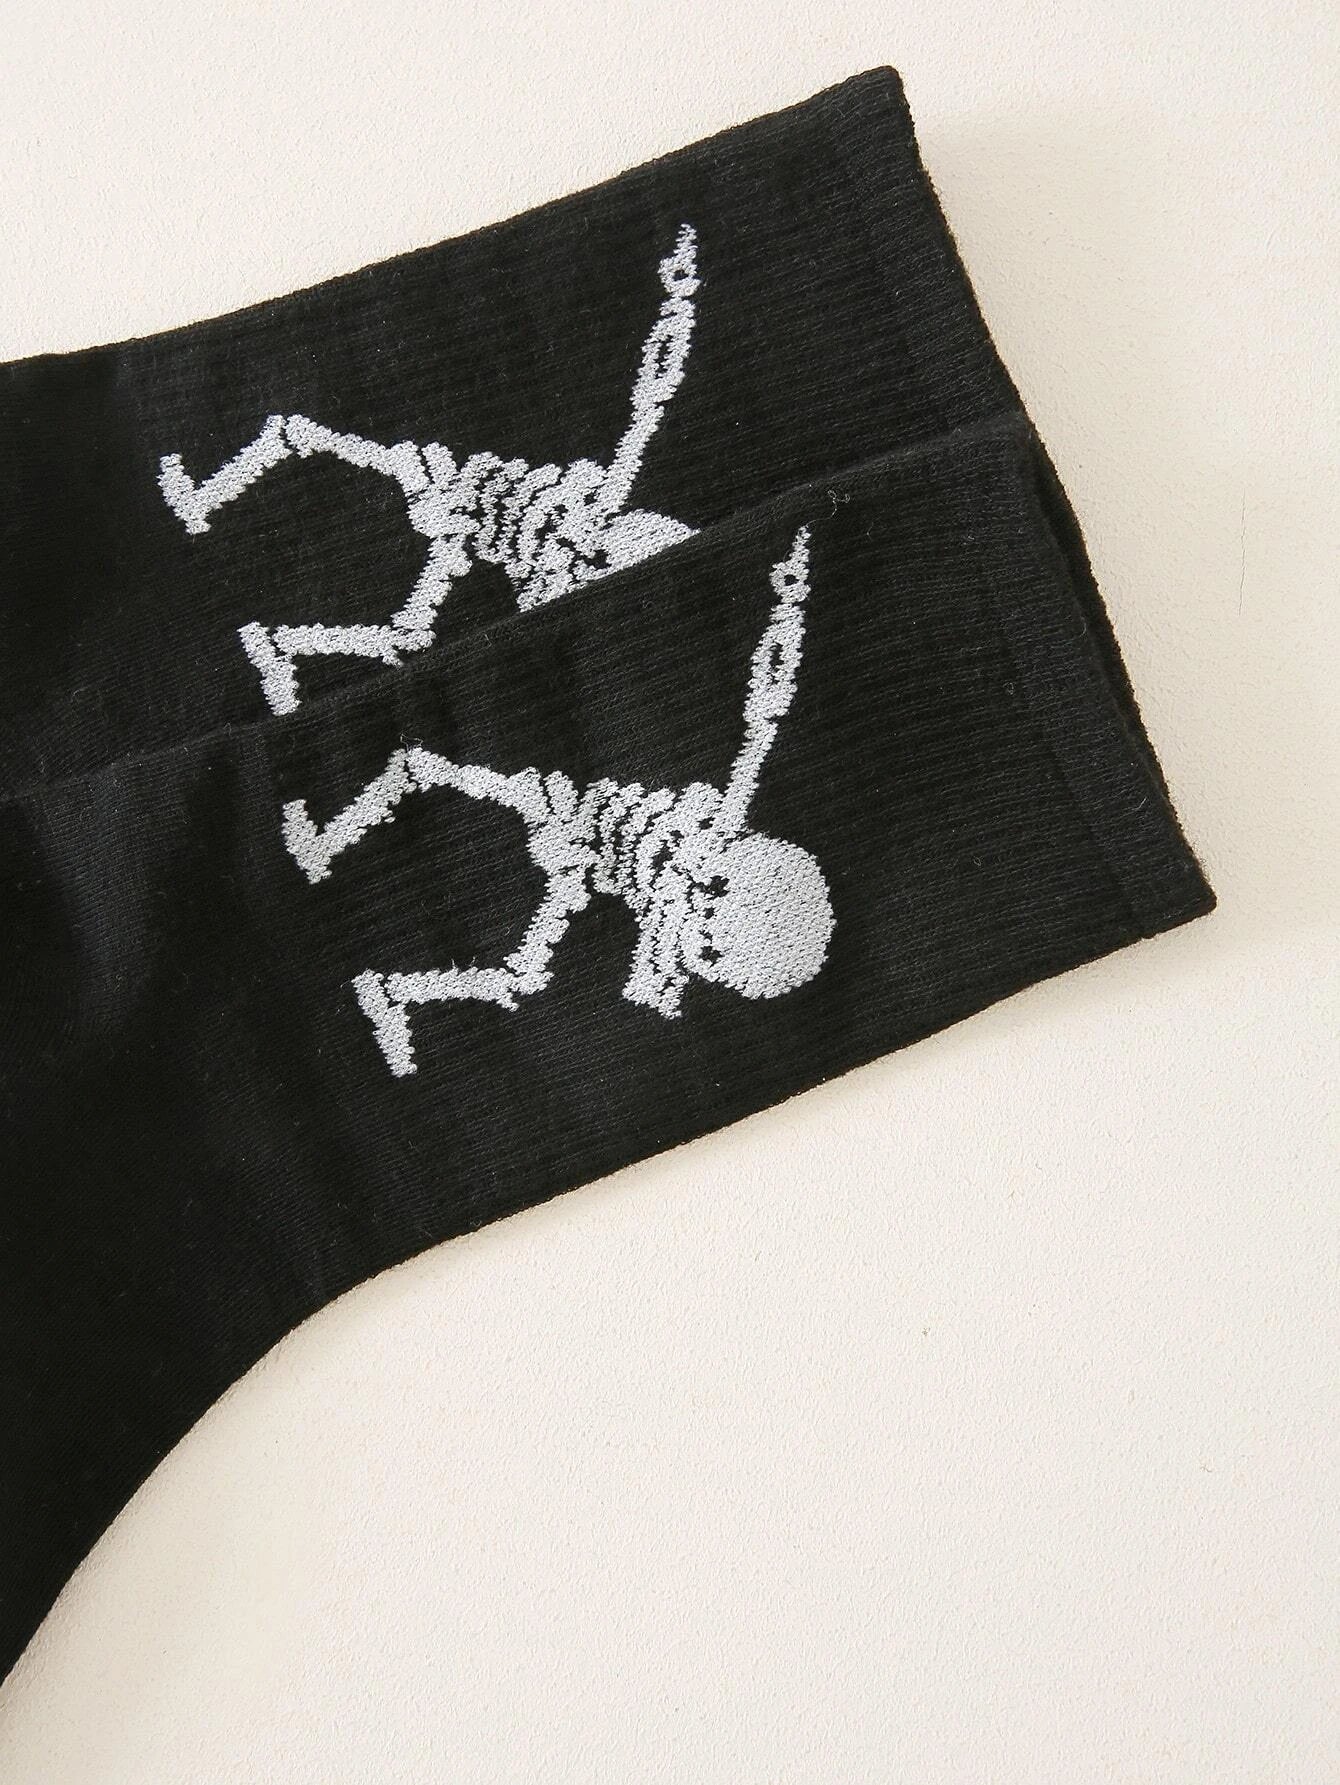  | Shein Skeleton Pattern Crew Socks | Socks | Shein | OneHub